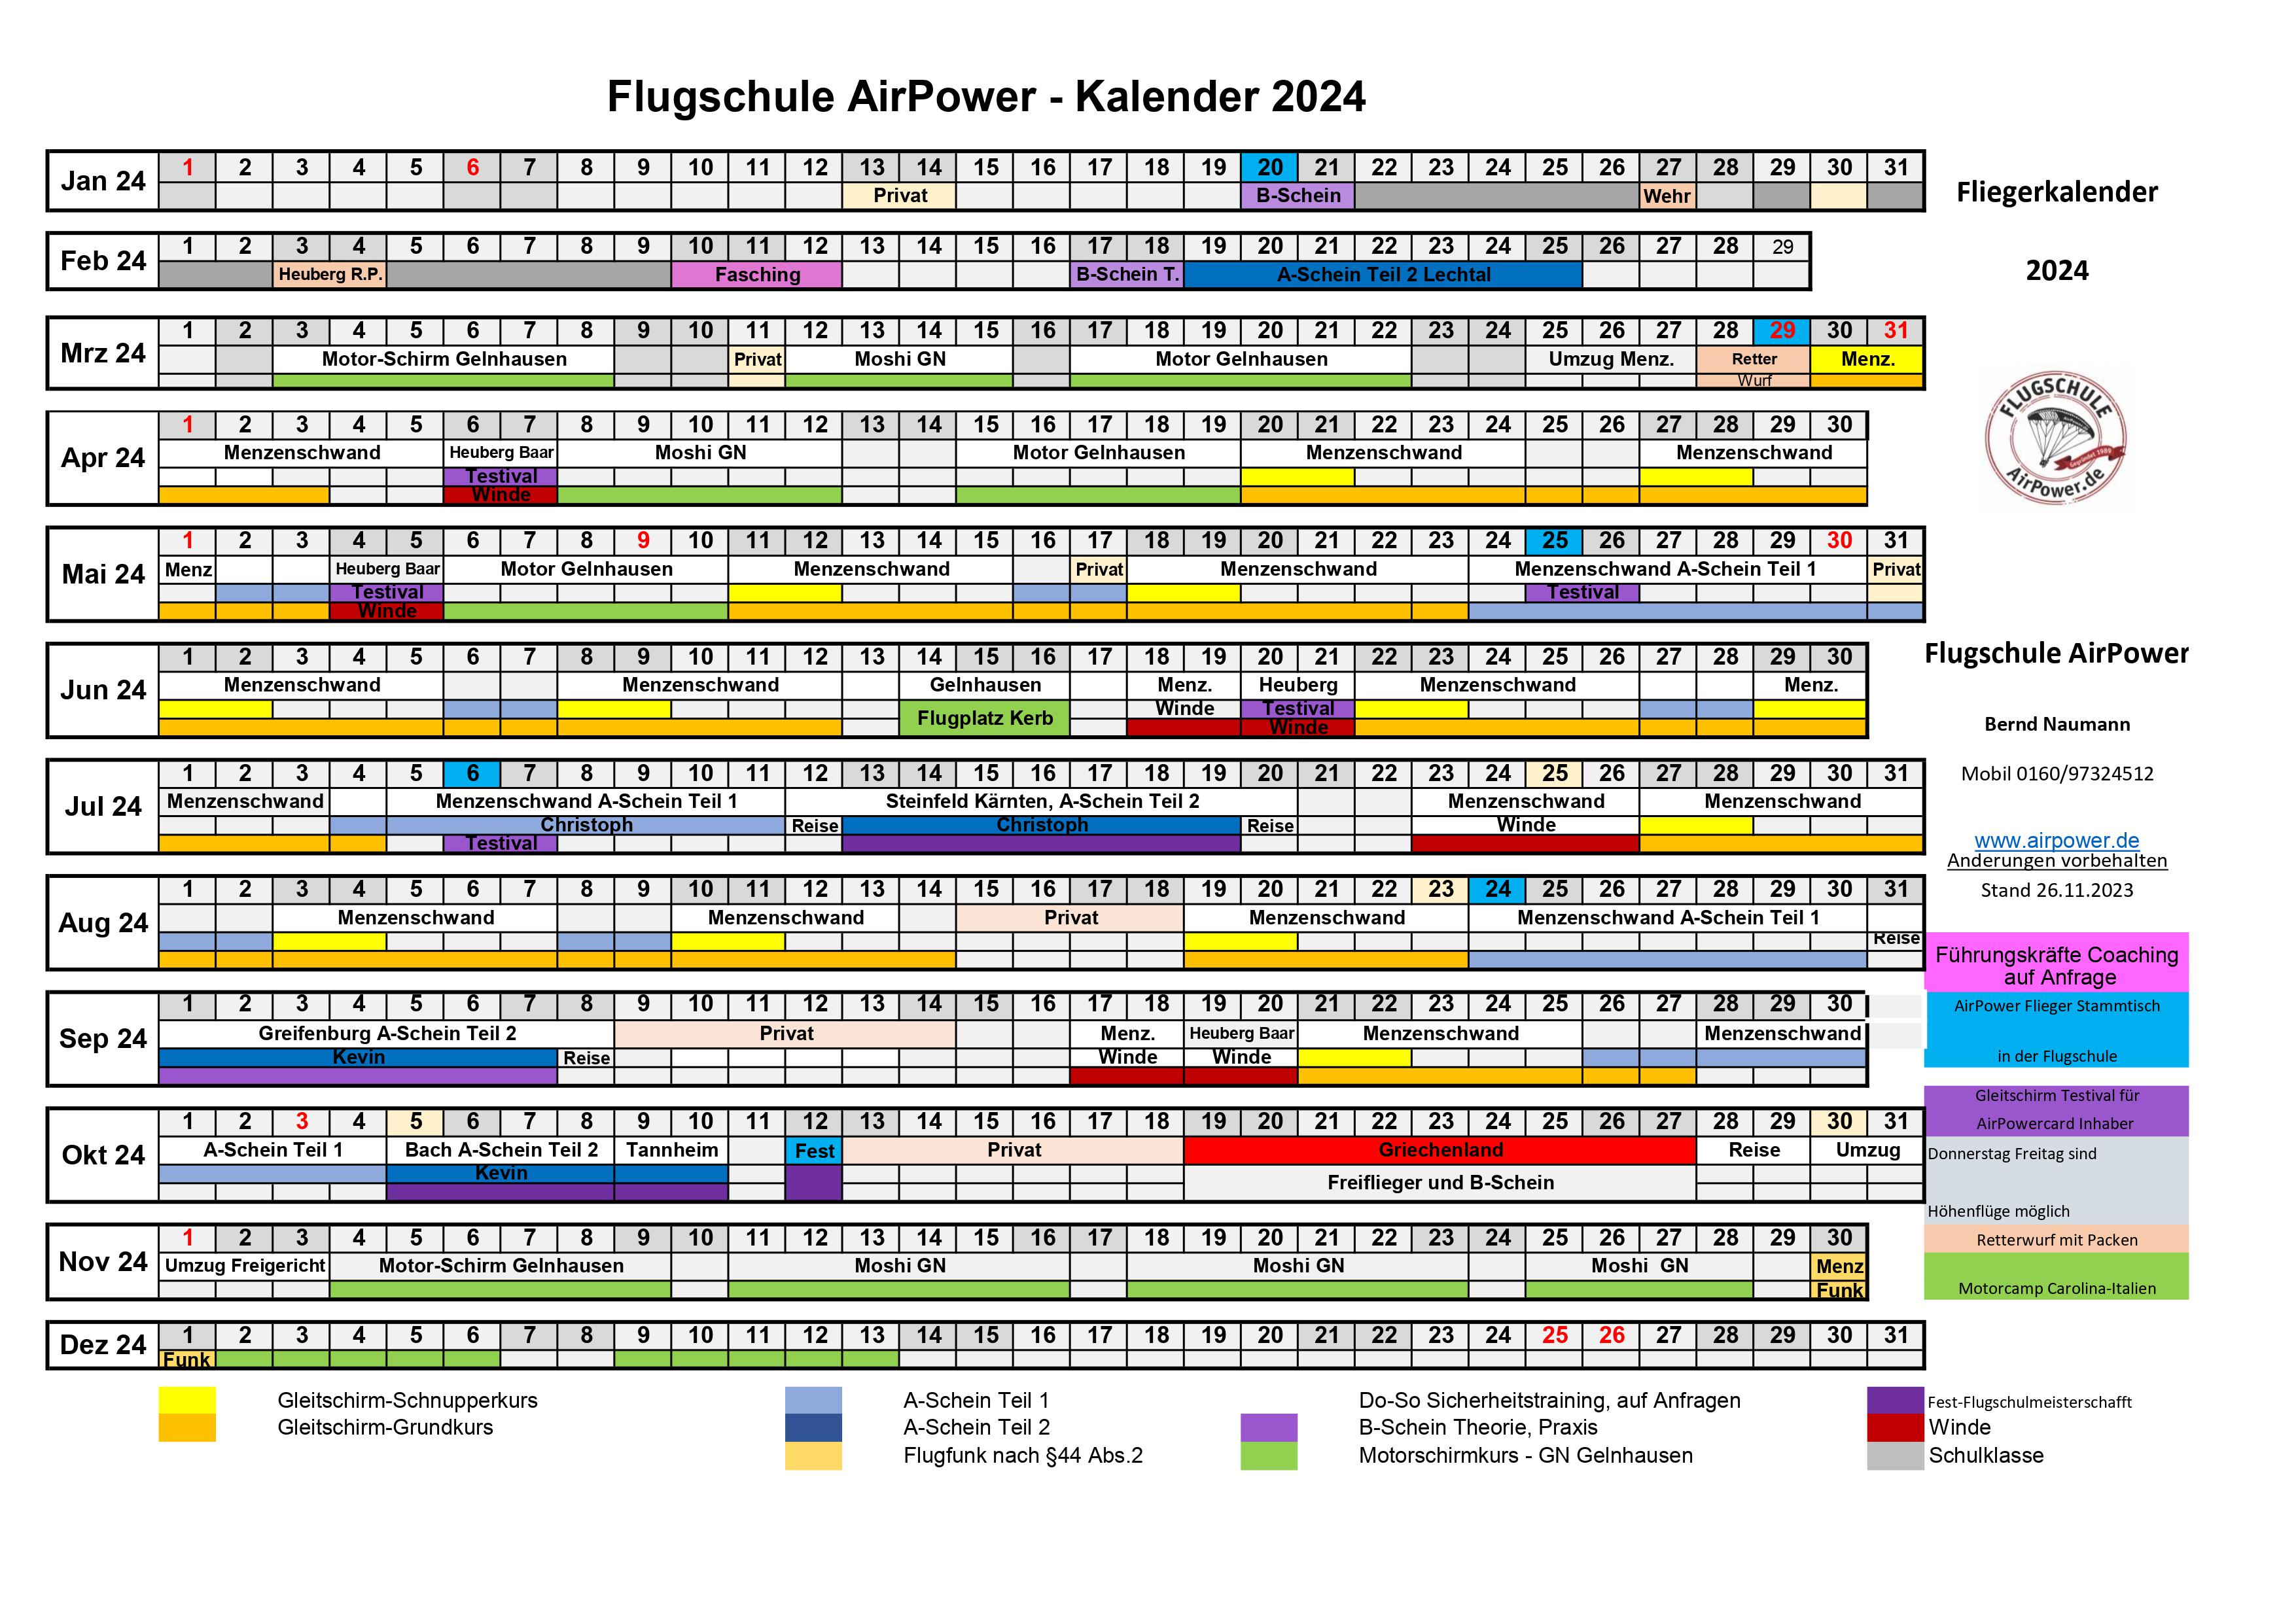 AirPower Kalender 26.11.2023(1)